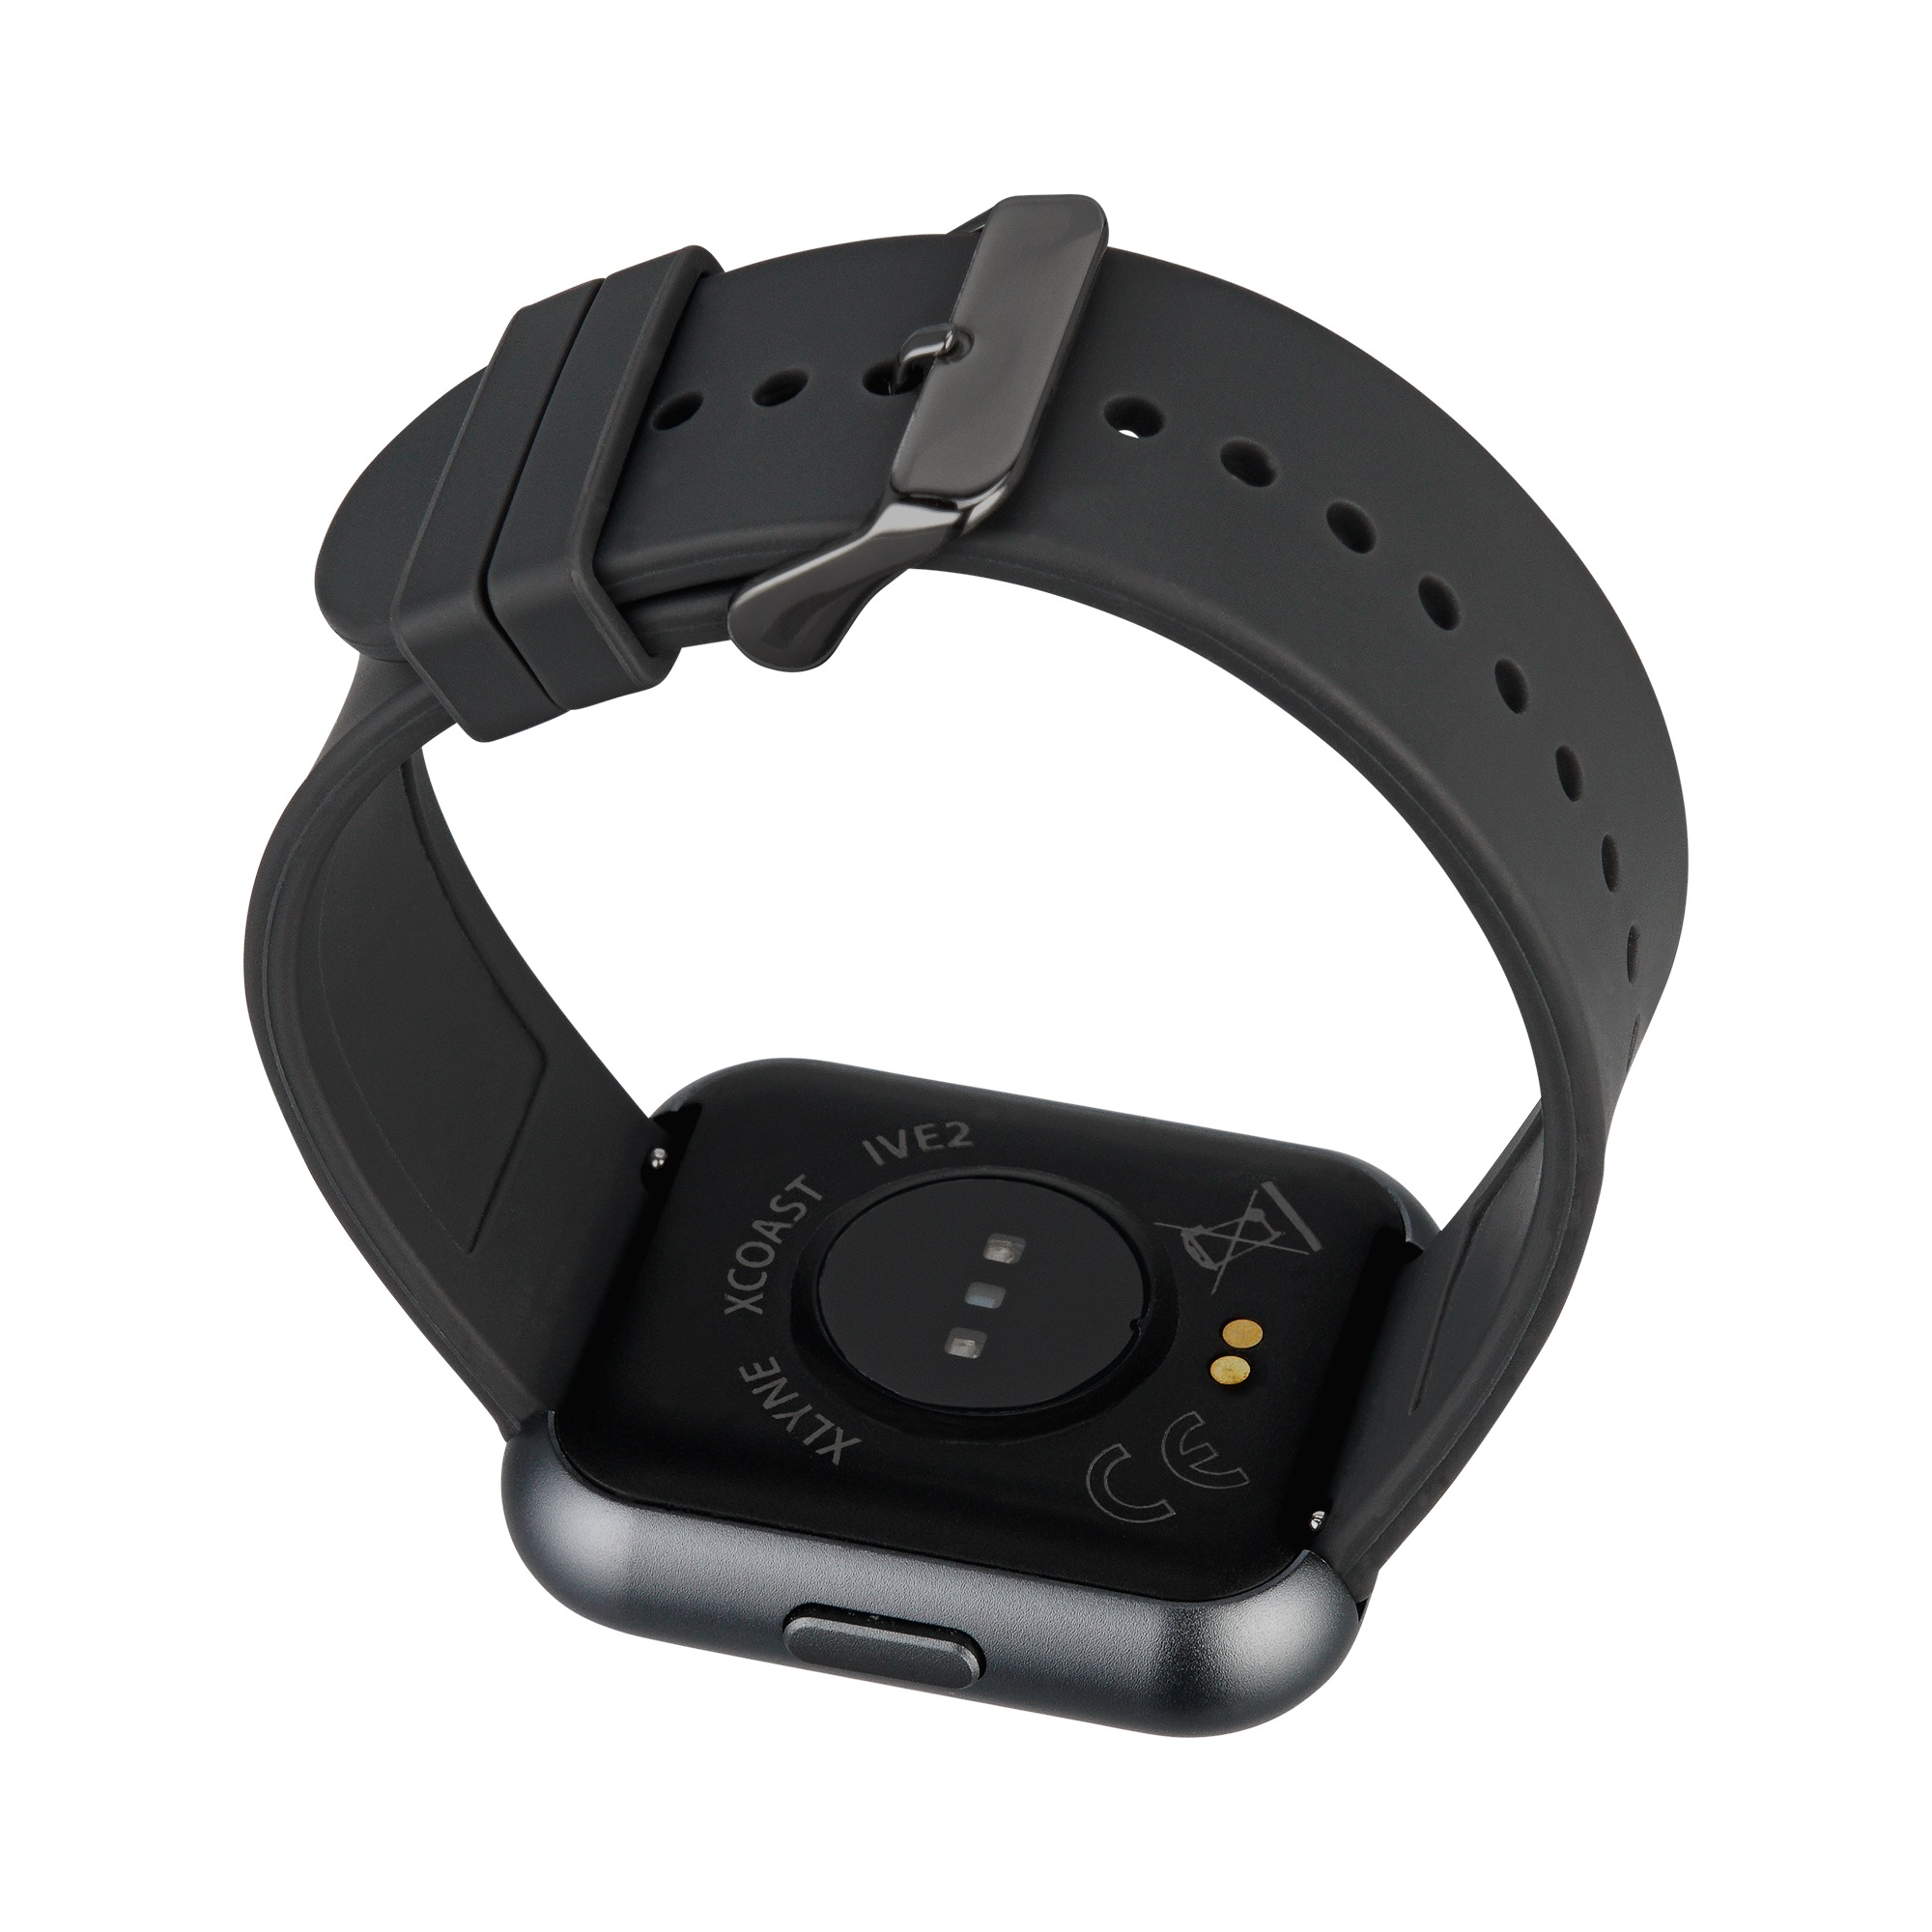 XCOAST galvanisiertes 20.8 - Smartwatch 2 Metall Silikon, ANTHRAZIT ANTHRAZIT cm, IVE